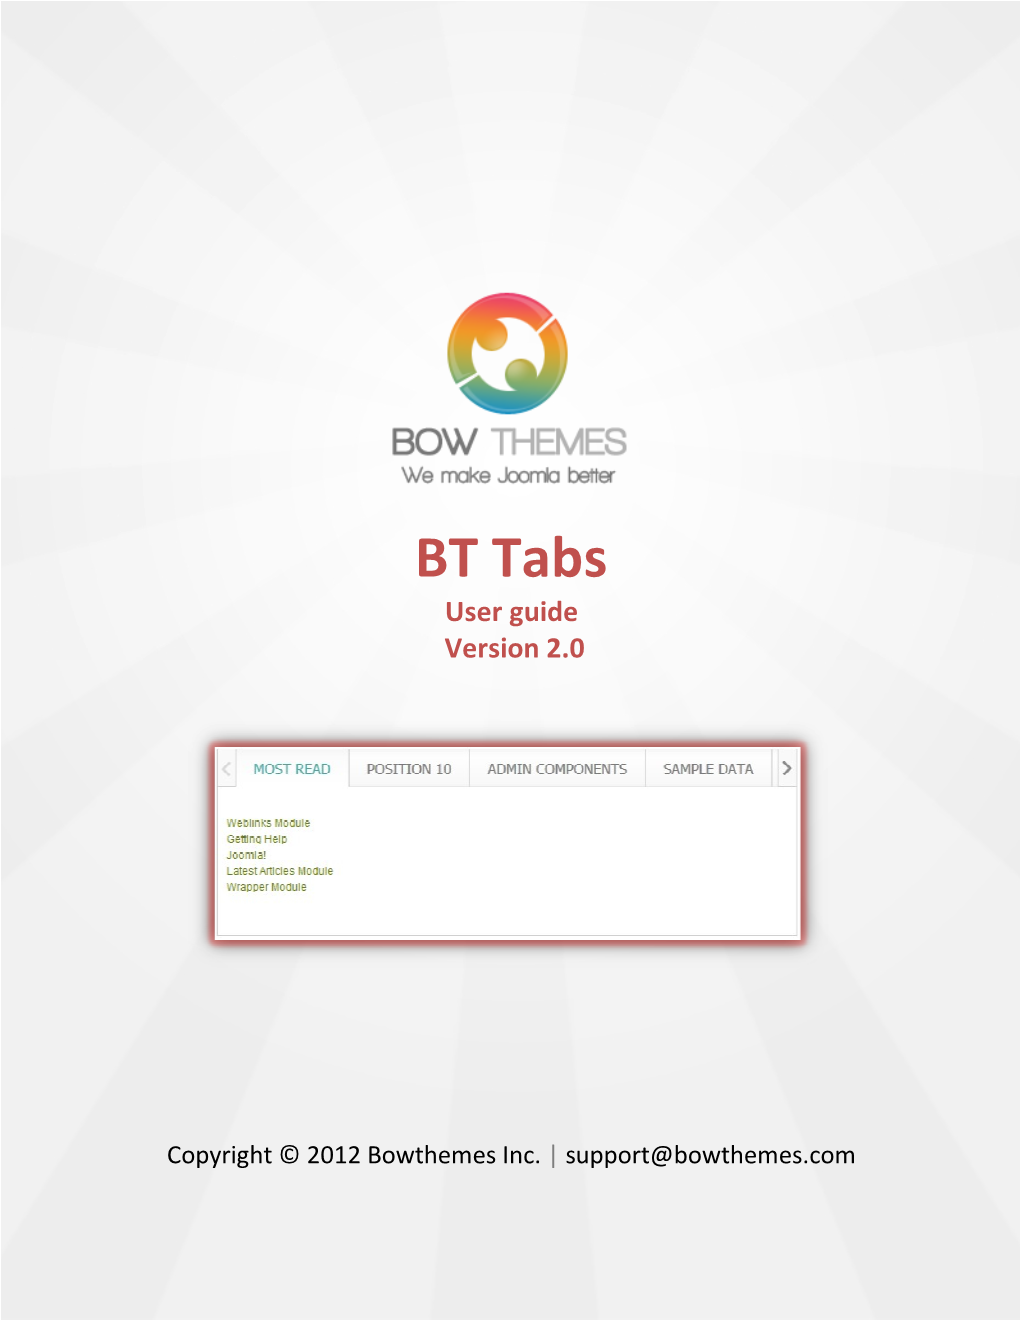 BT Tabs User Guide Version 2.0